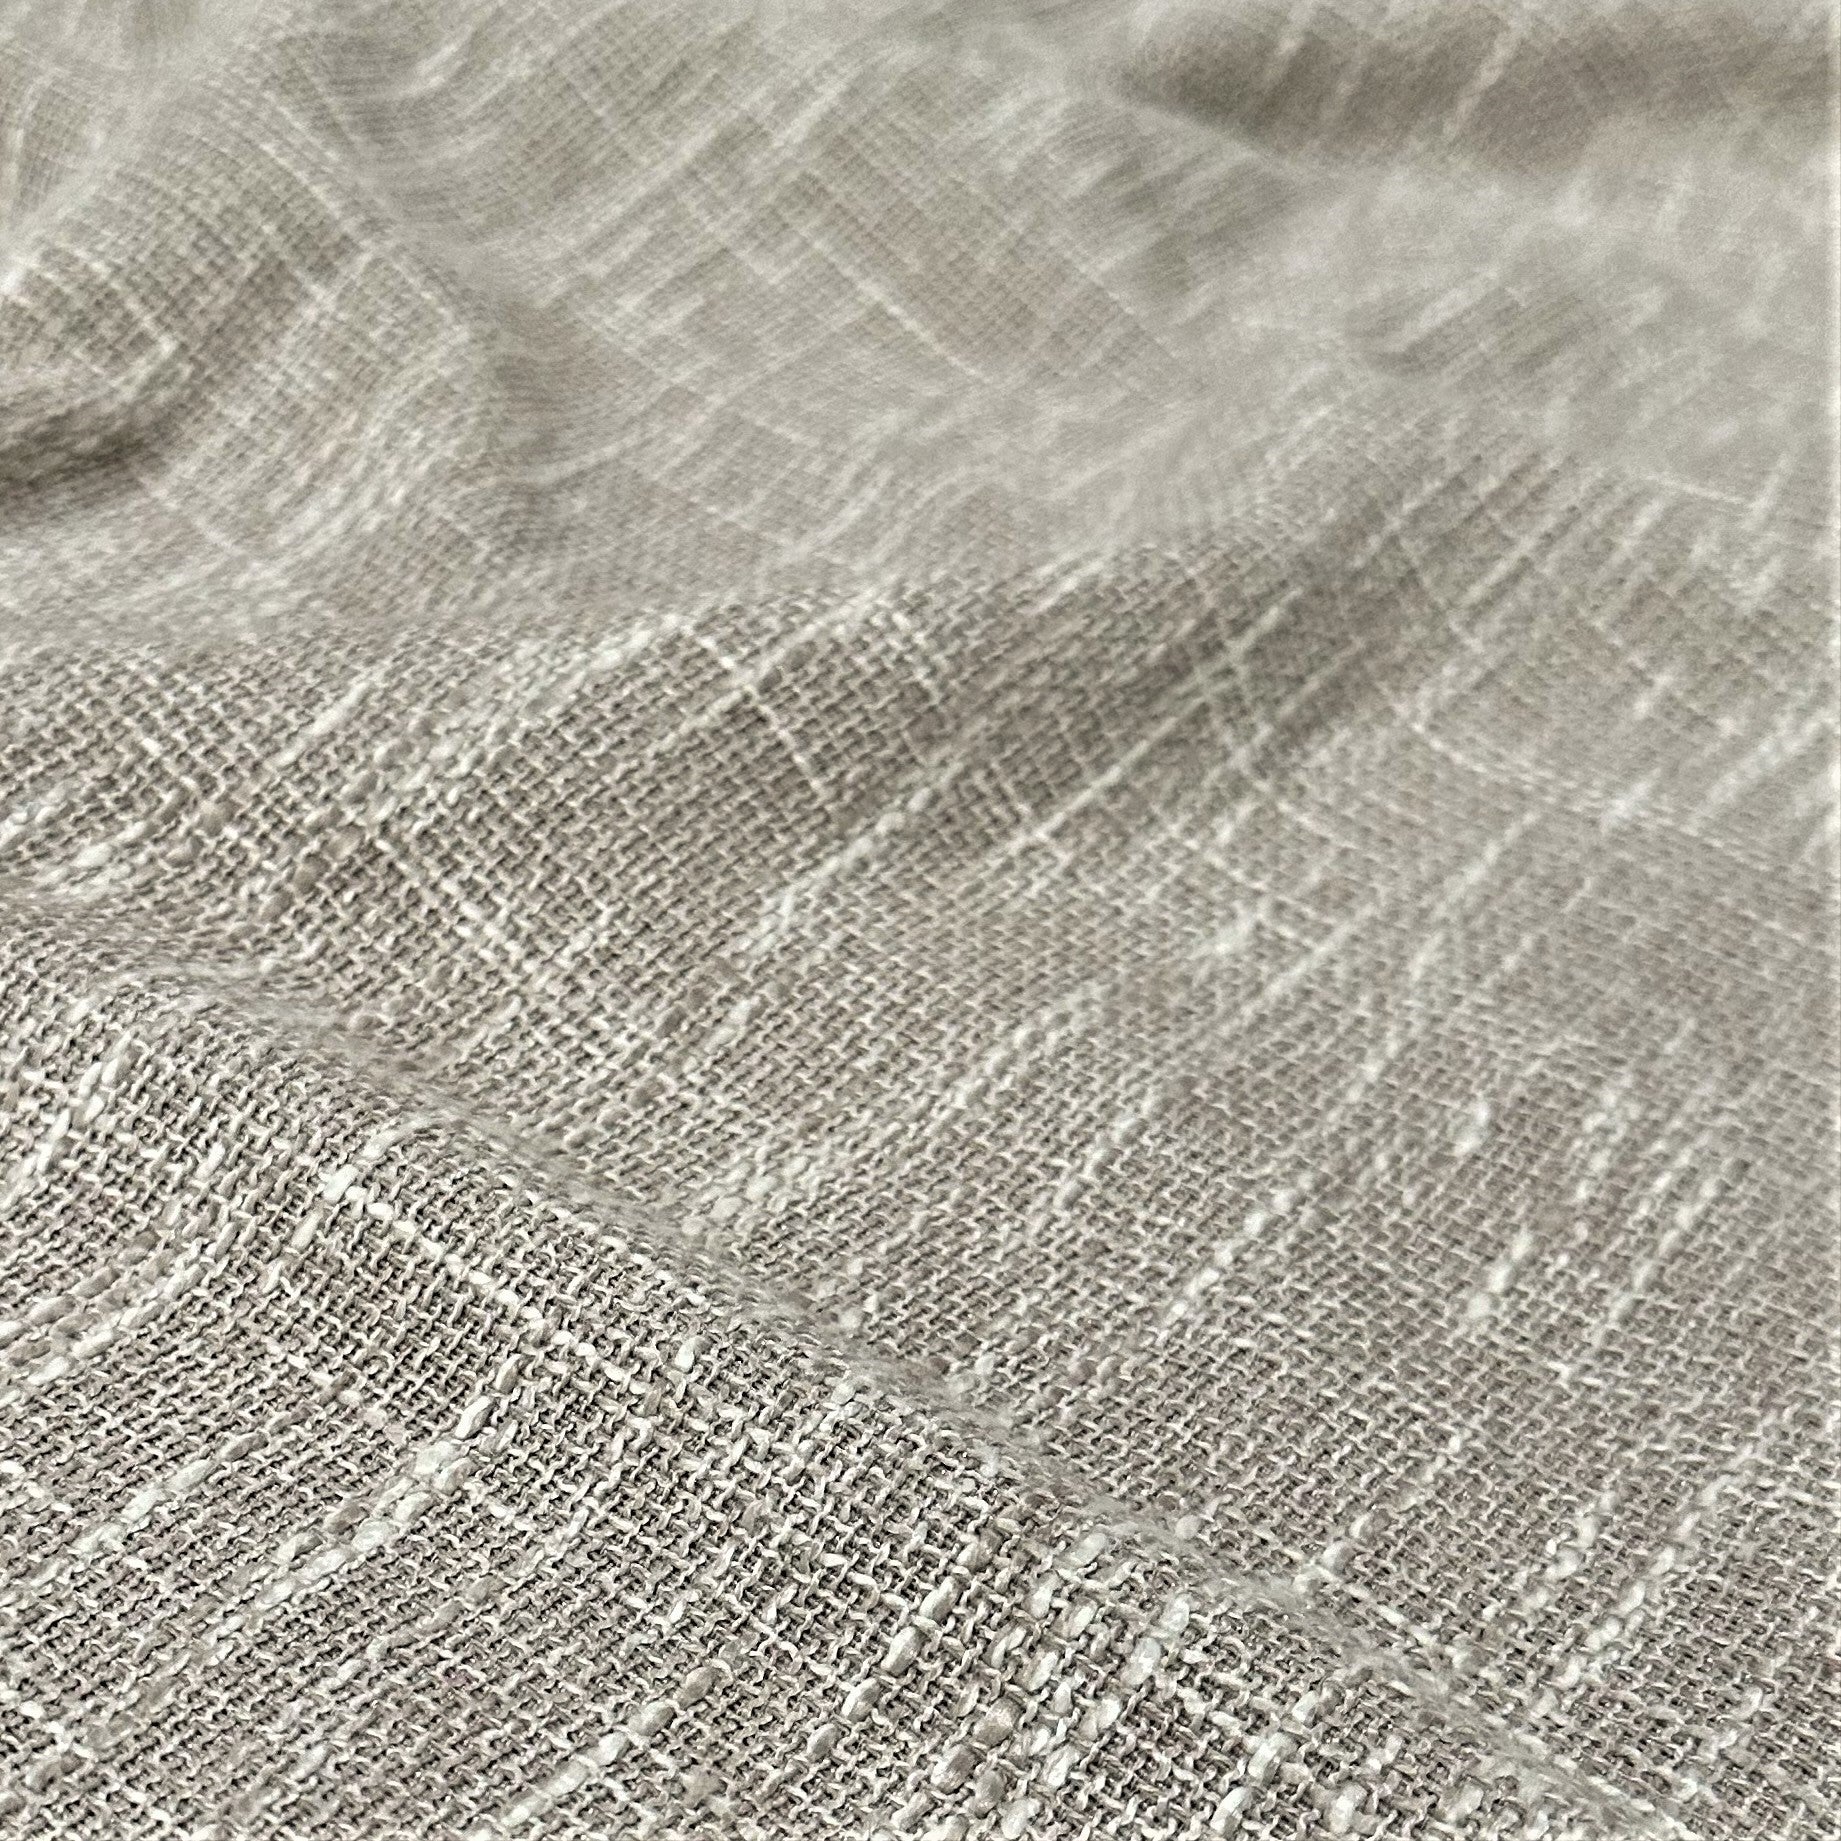 Capri Slub Linen Wholesale Fabric in Silver – Urquid Linen